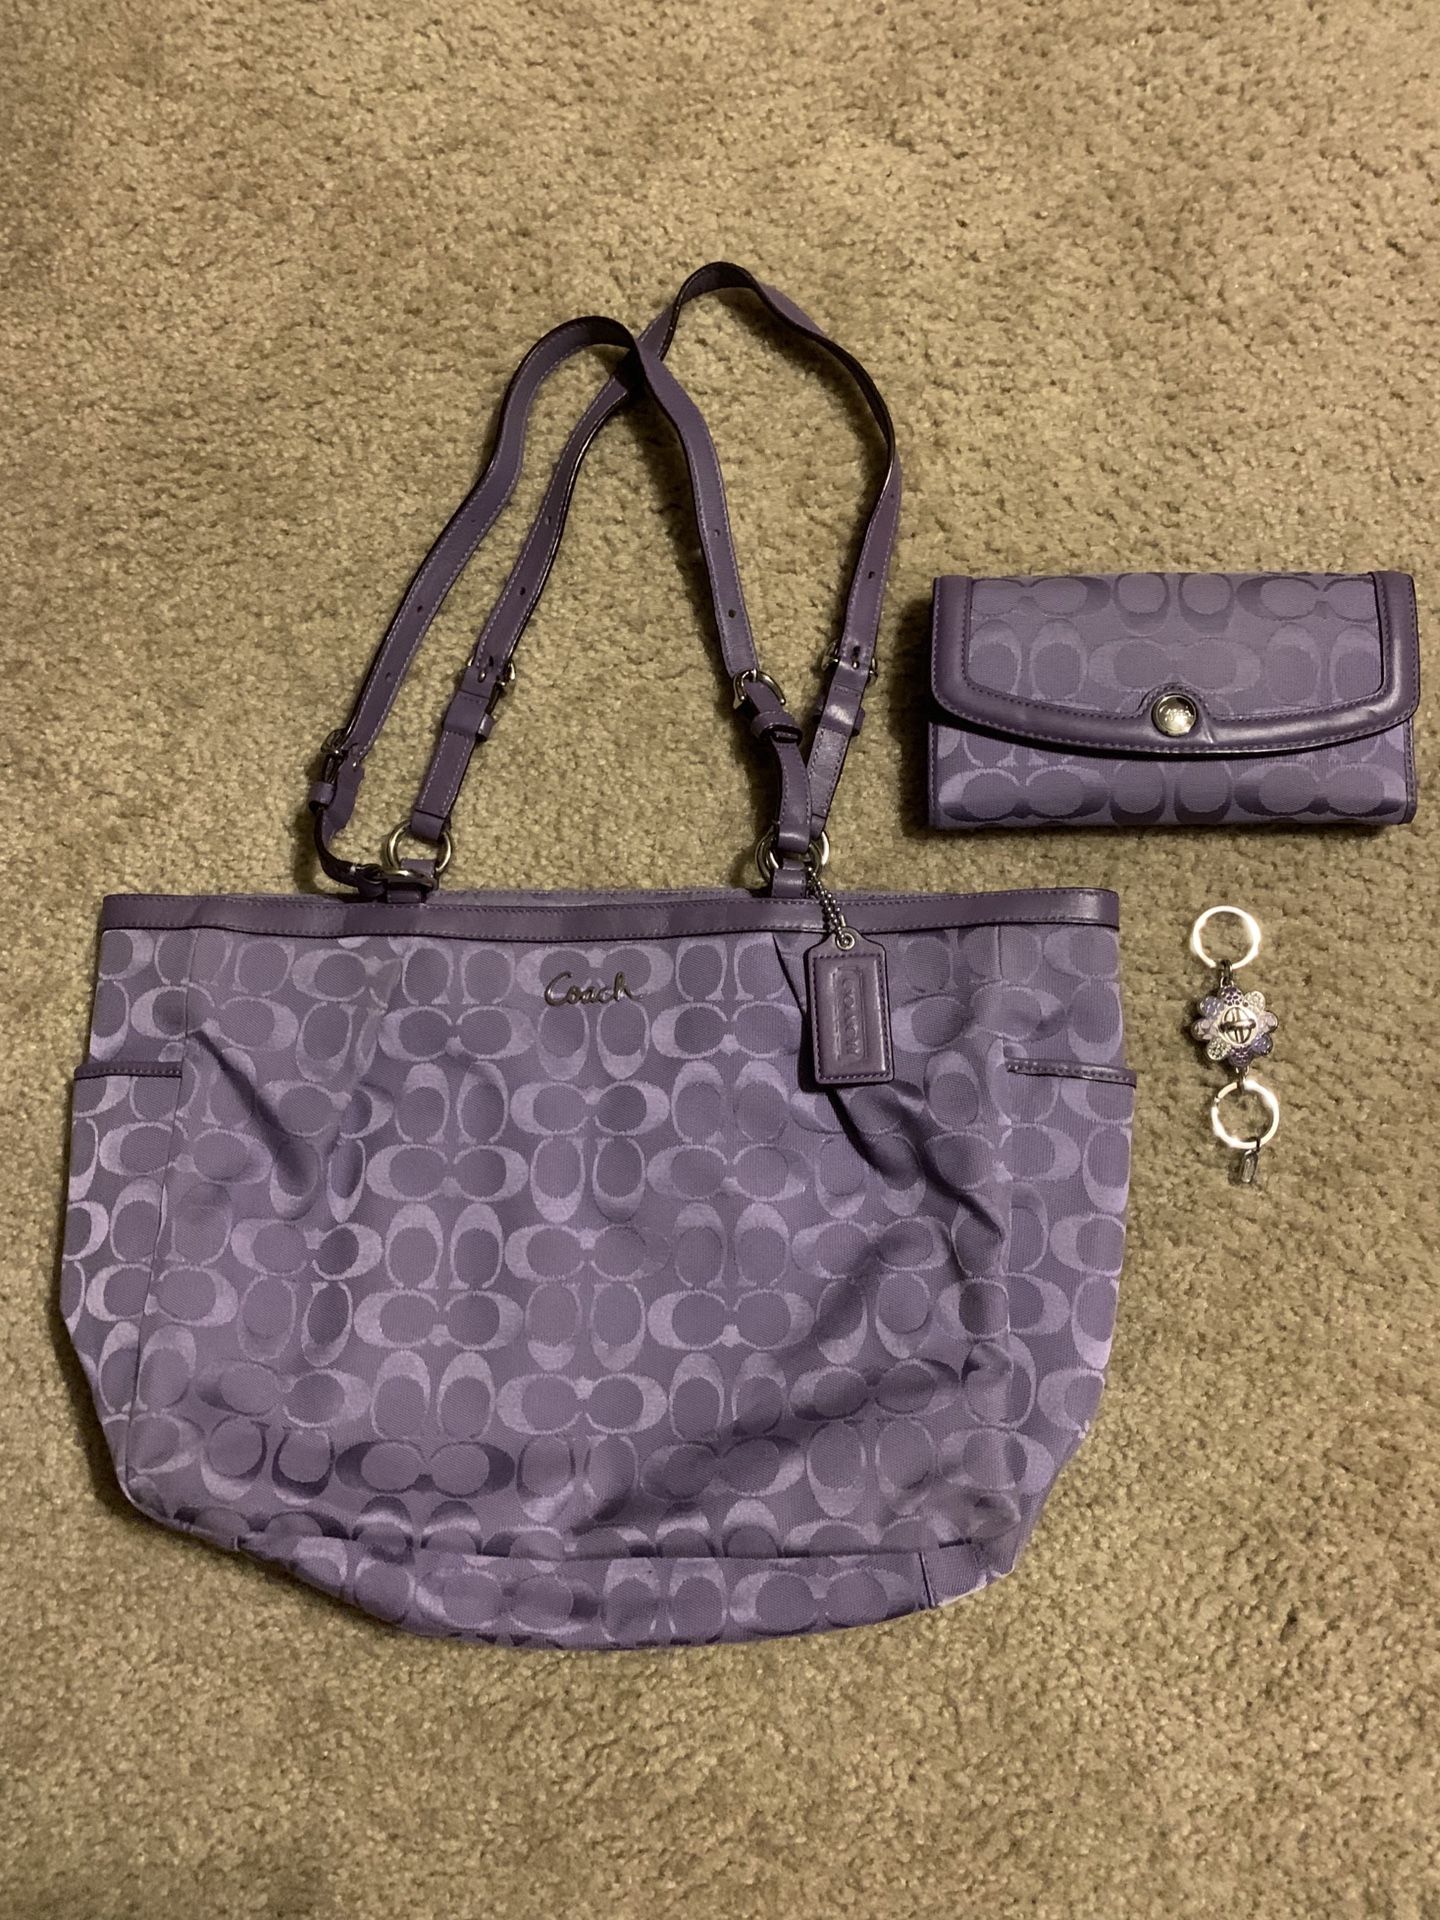 Coach purse/wallet/key chain